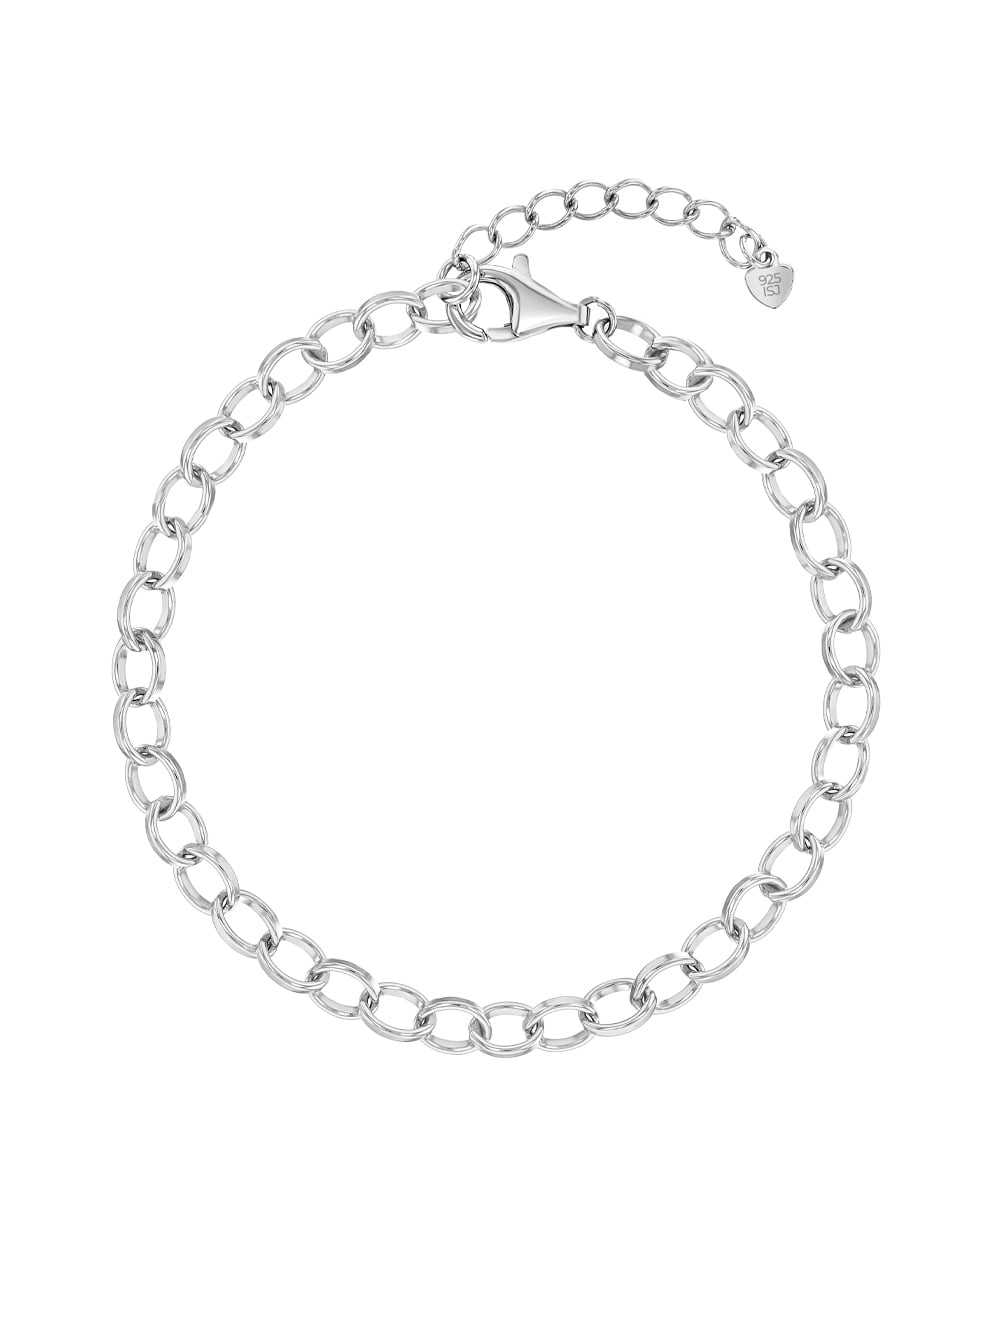 925 Sterling Silver 6 Inch Belcher Chain Charm Bracelet Child Small